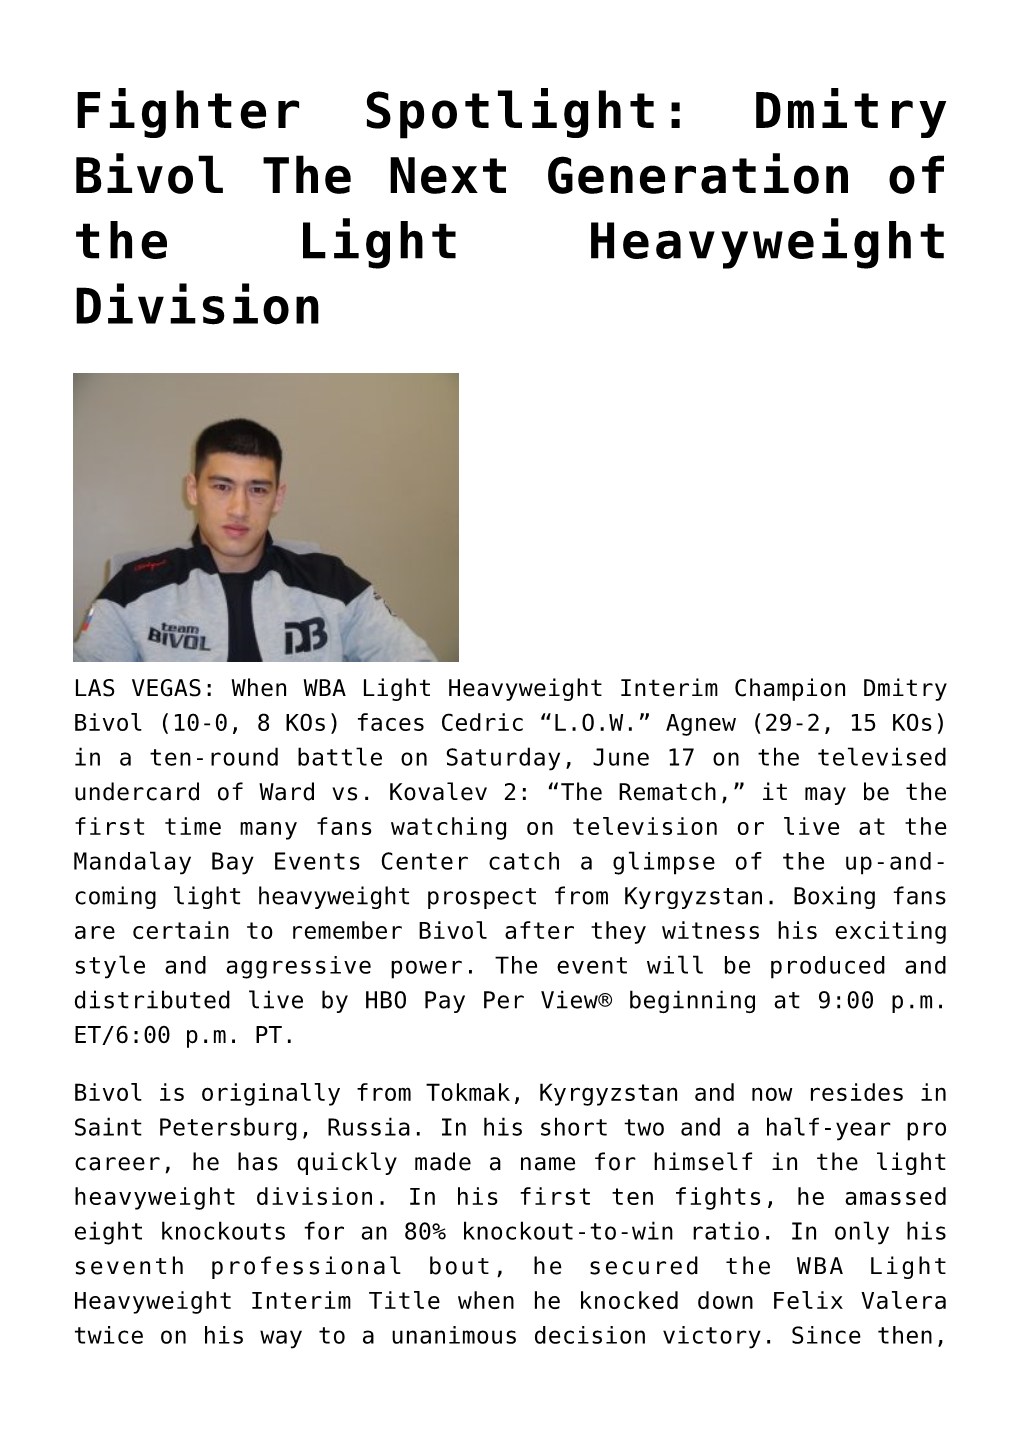 Fighter Spotlight: Dmitry Bivol the Next Generation of the Light Heavyweight Division